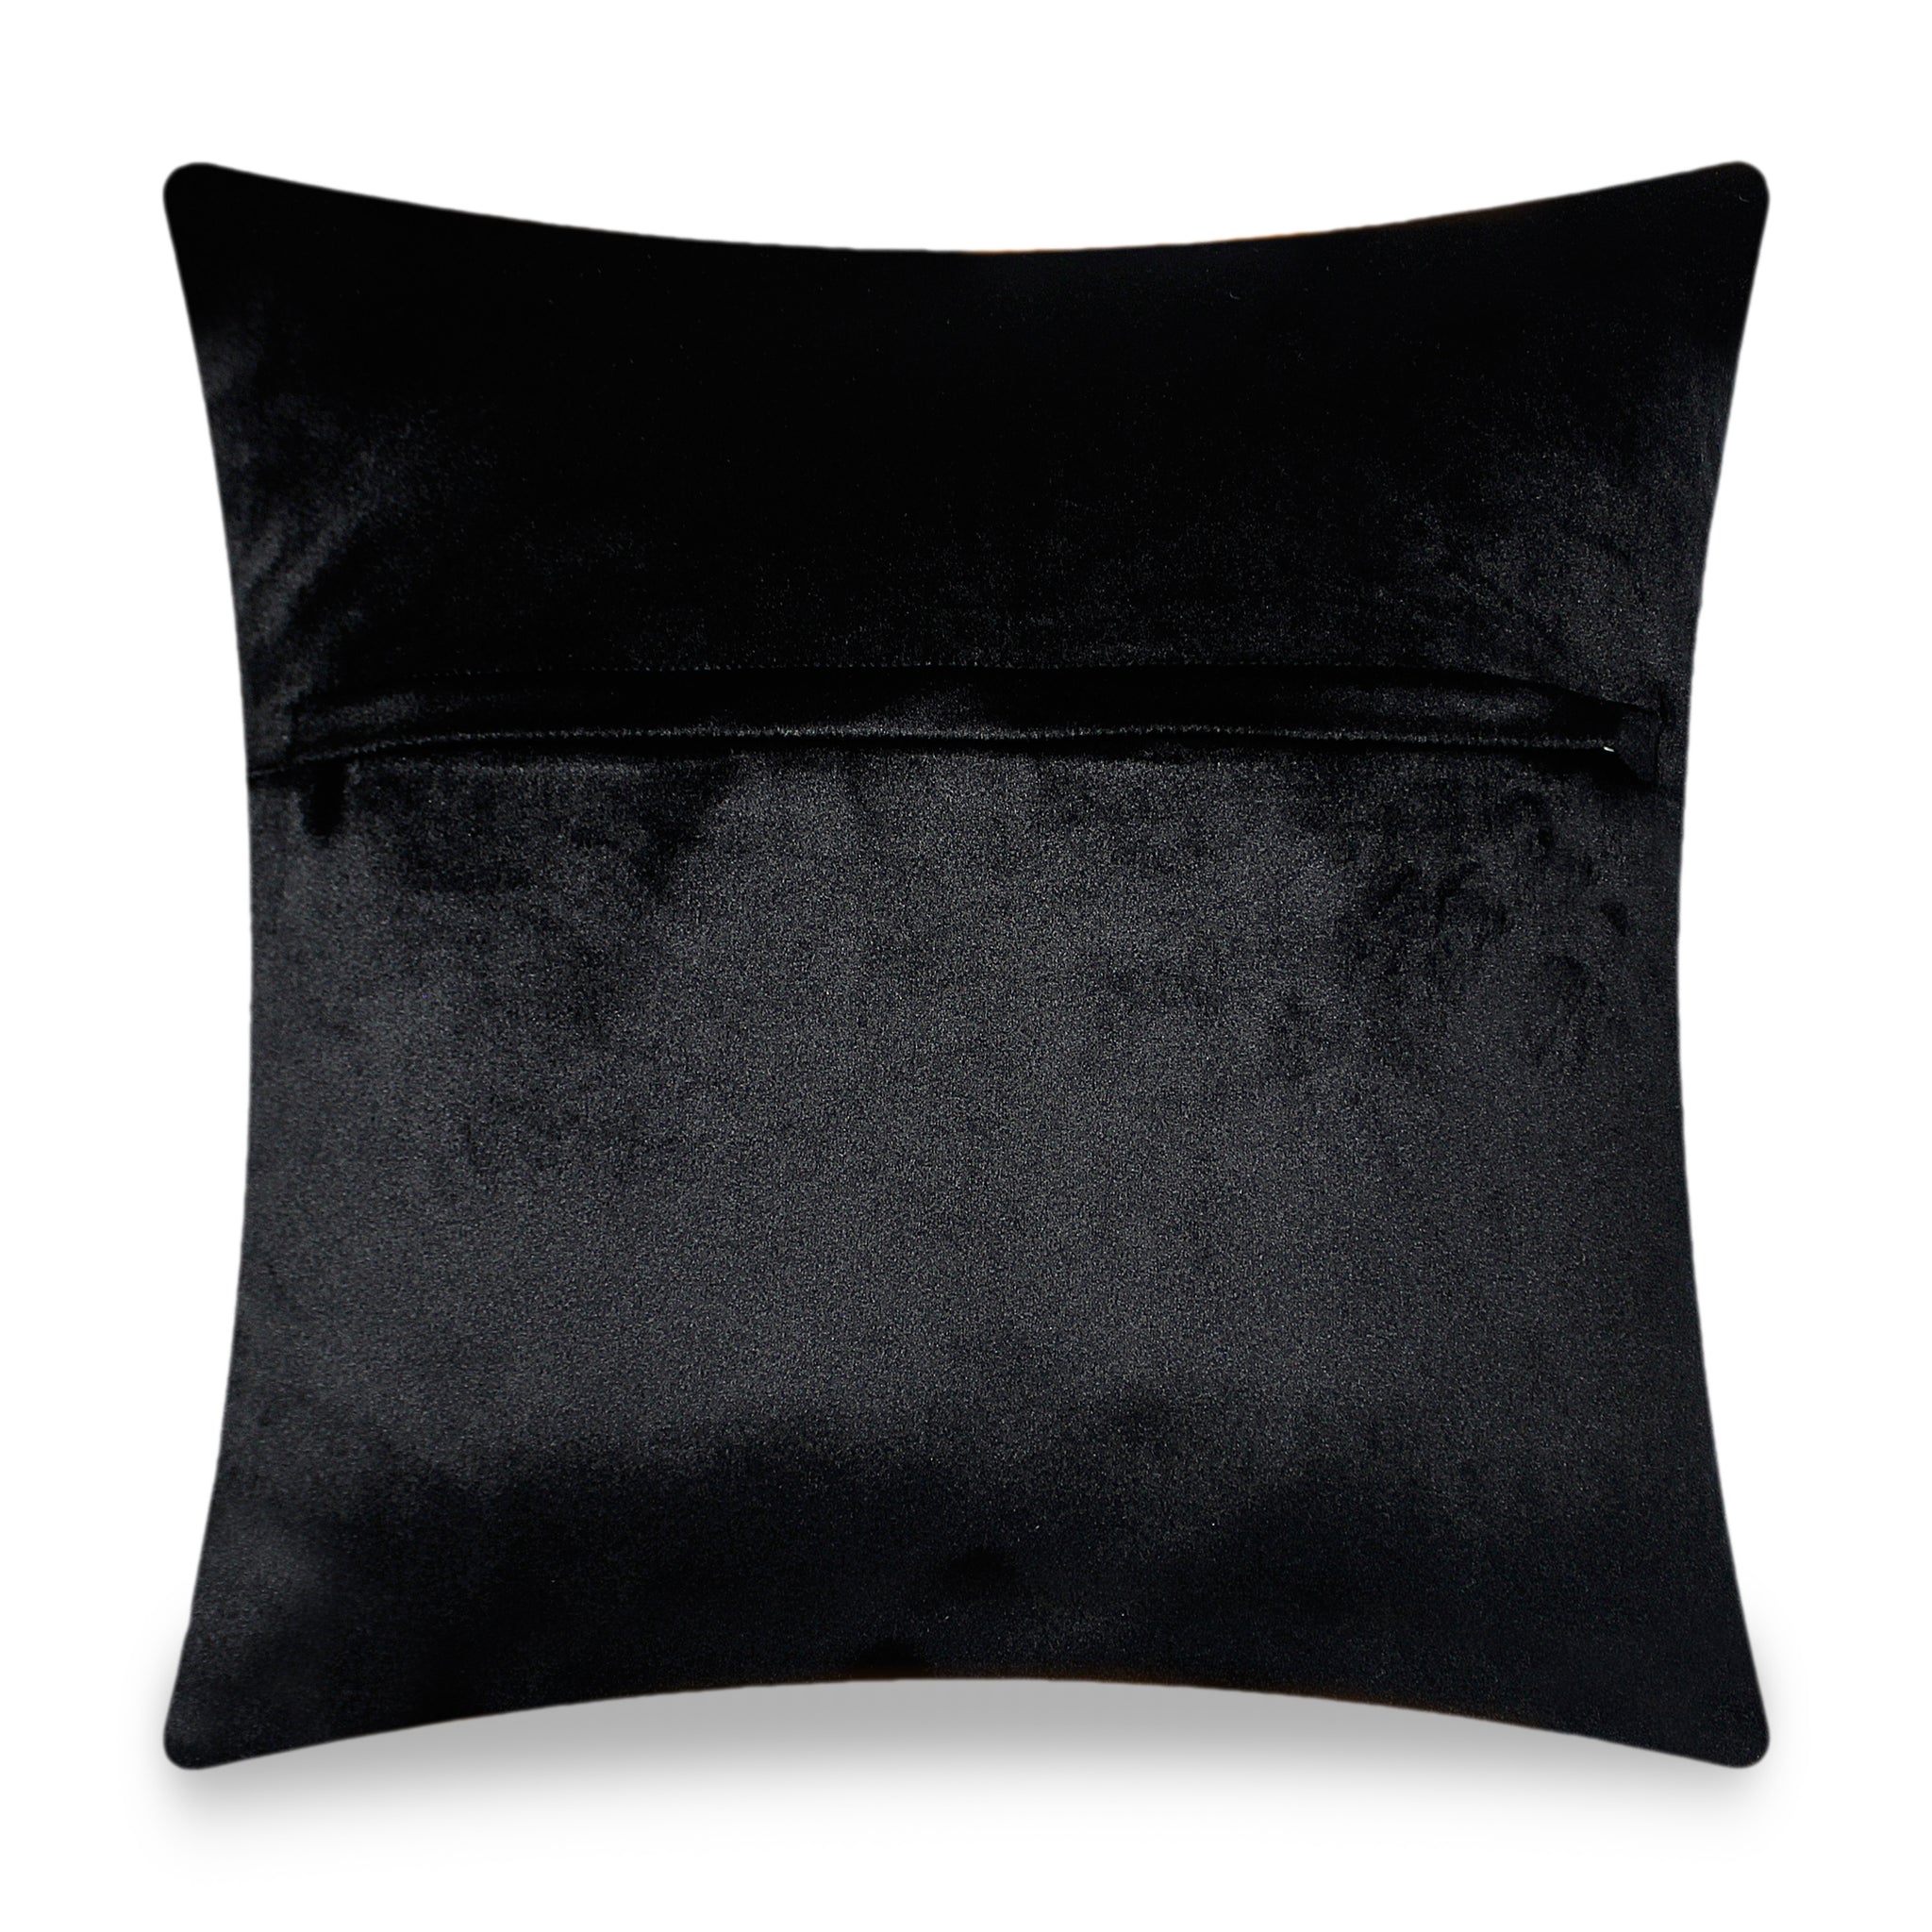  Velvet Cushion Cover Frida Kahlo and Jungle Decorative Pillowcase Home Decor Throw Pillow for Sofa Chair 45x45 cm 3